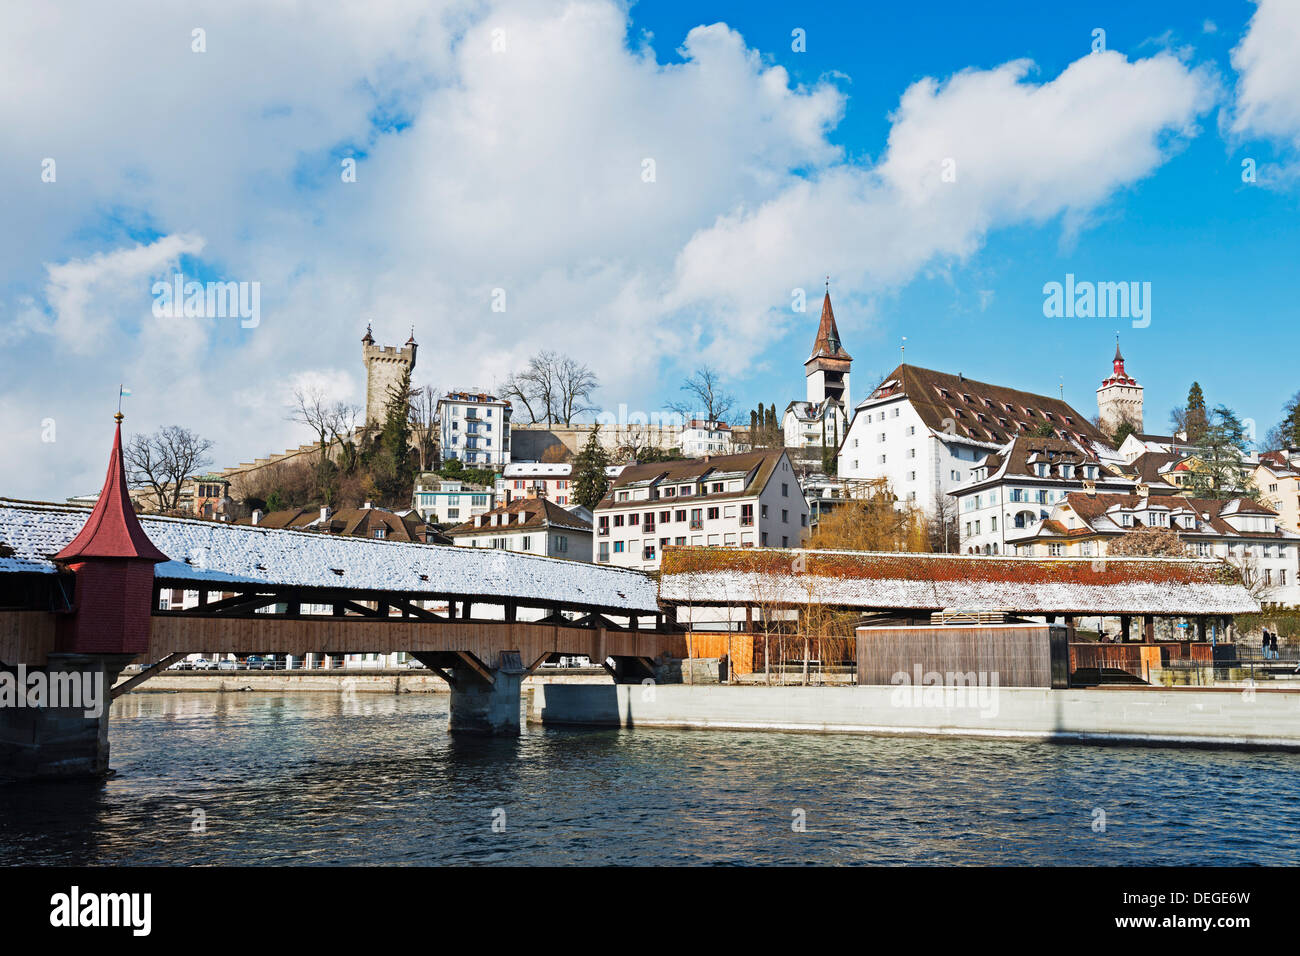 Spreuerbrucke, covered wooden bridge over the River Reuss, Lucerne, Switzerland, Europe Stock Photo